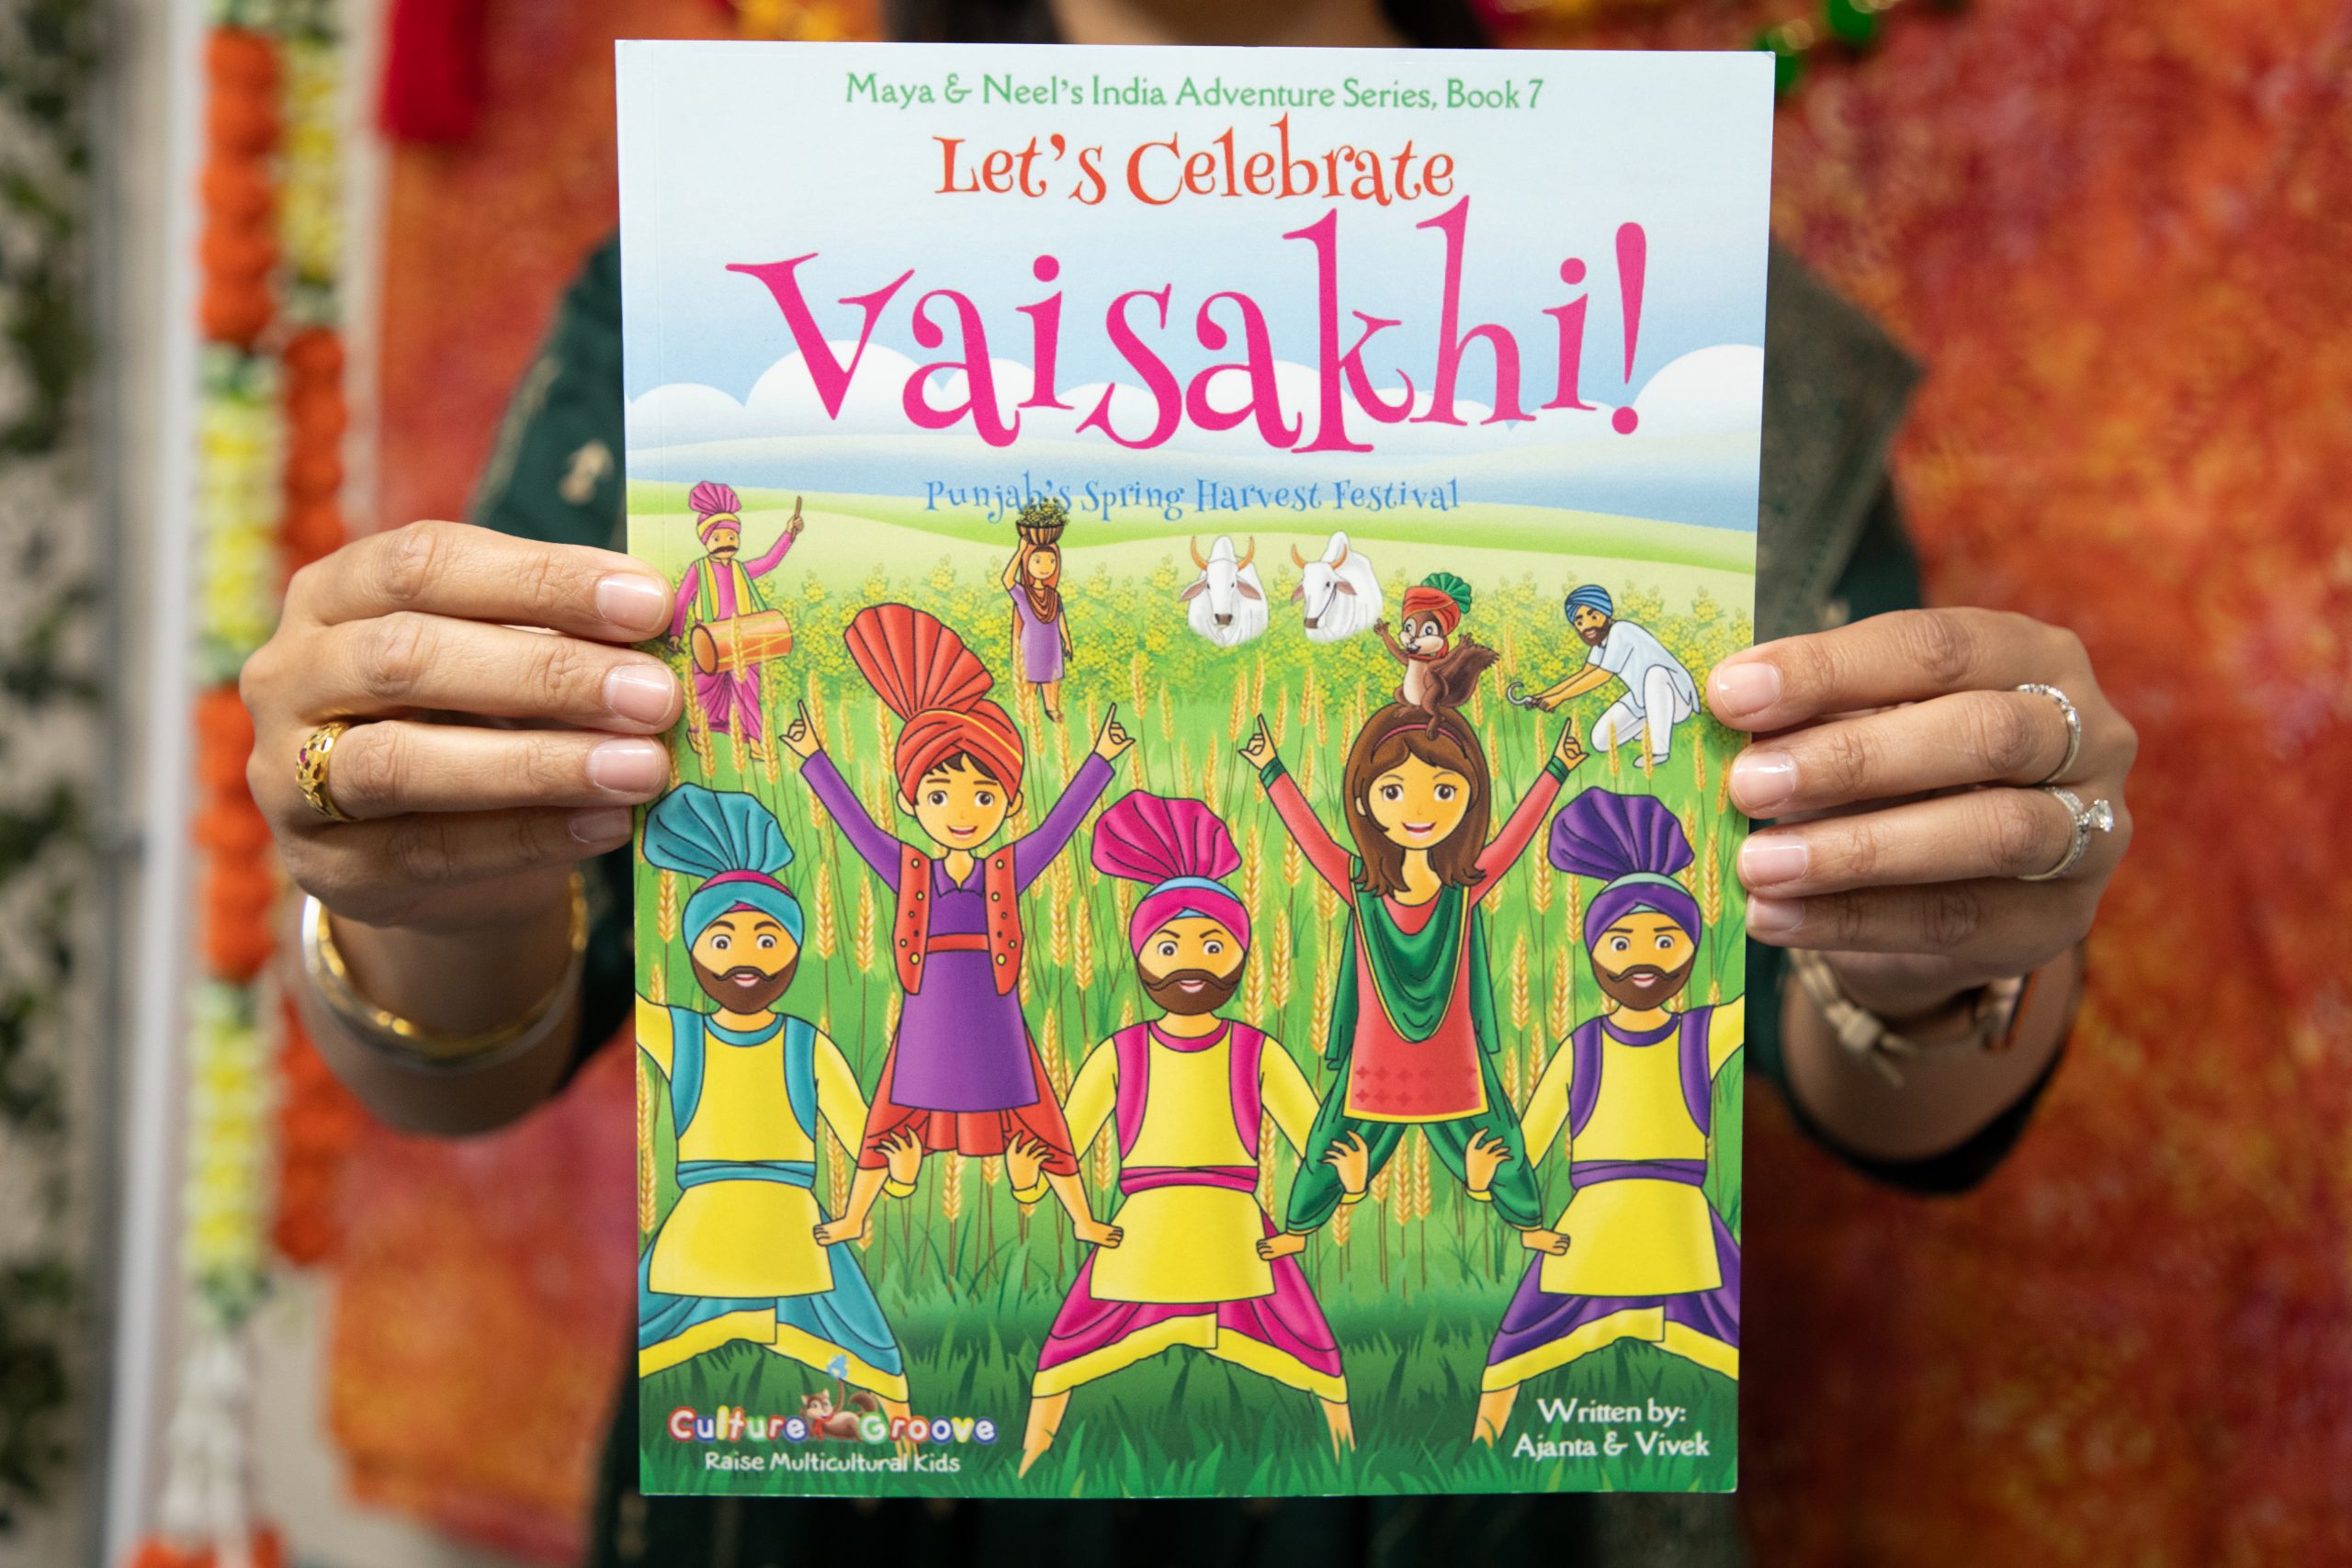 The book "Let’s Celebrate Vaisakhi! Punjab’s Spring Harvest Festival" by Ajanta Chakraborty and Vivek Kumar.